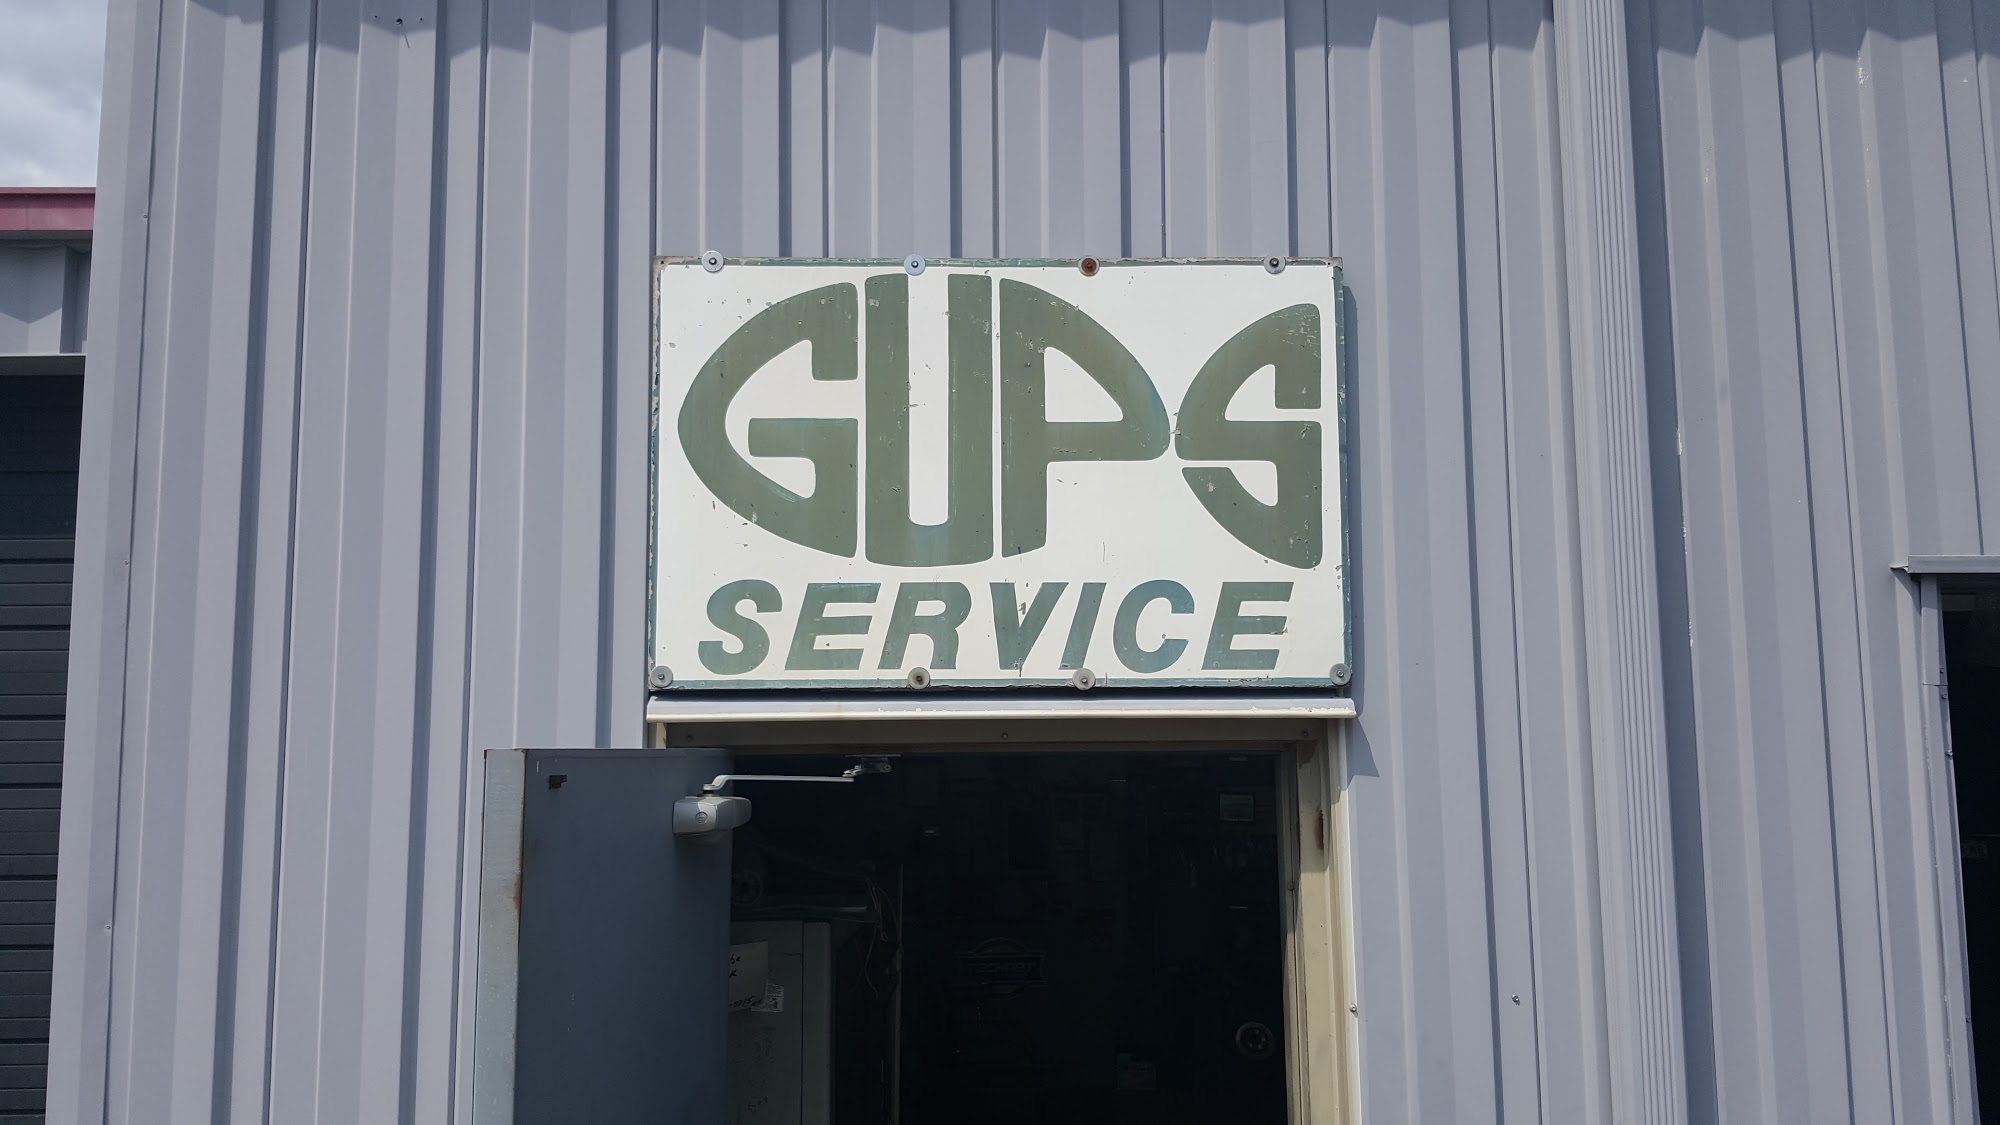 Gup's Westside Service